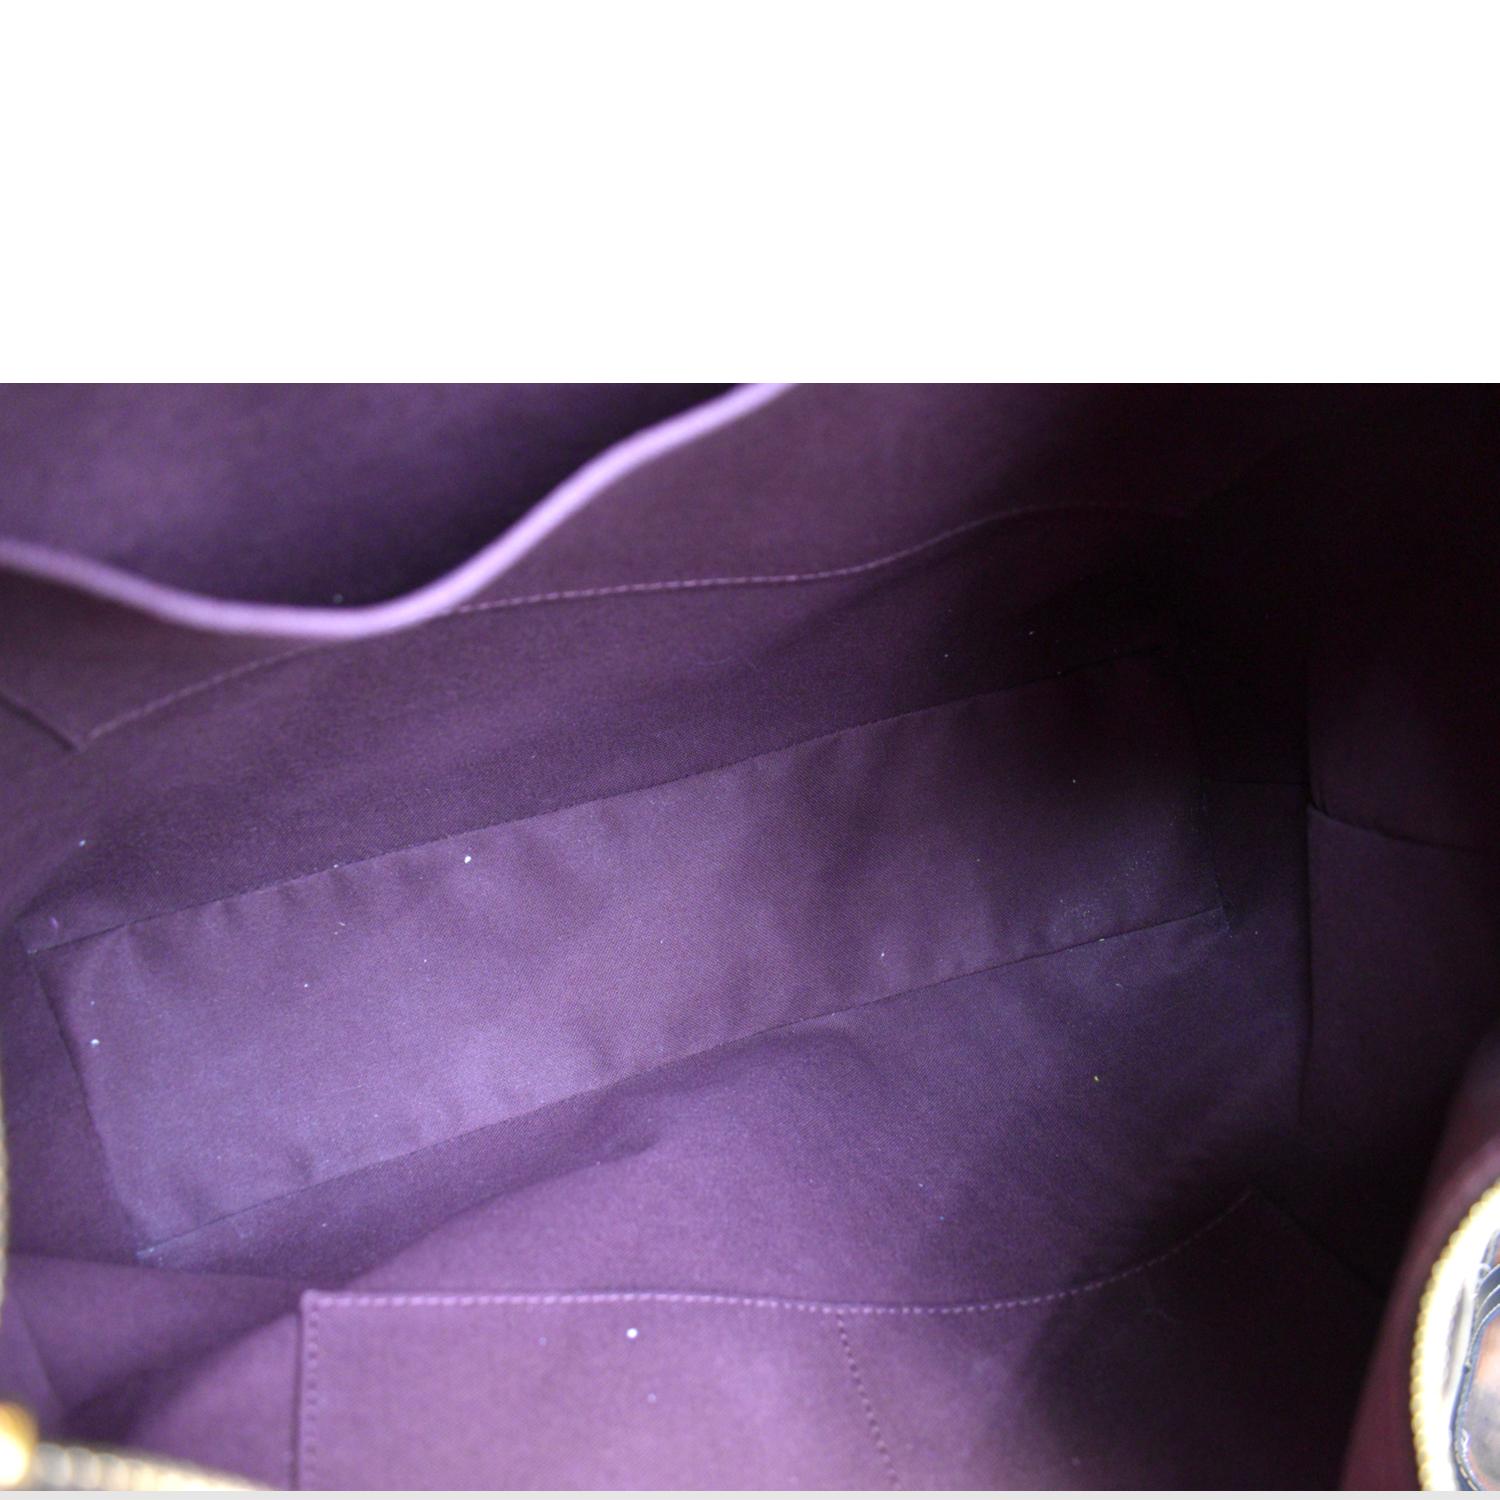 LNIB Louis Vuitton Berri MM Monogram Canvas Shoulder Bag in near